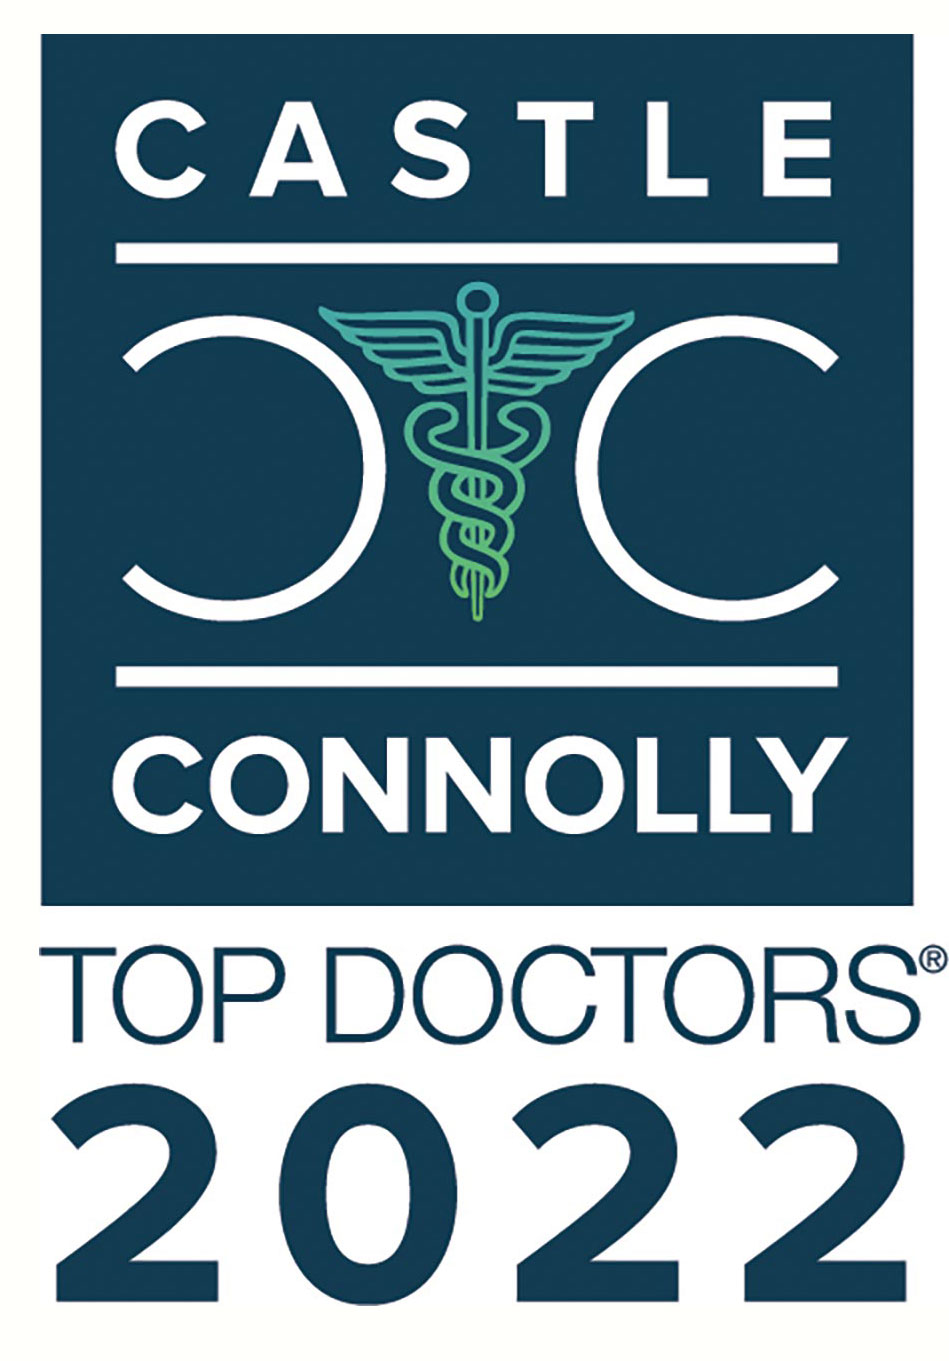 Castle Connolly Top Doctors 2022 logo